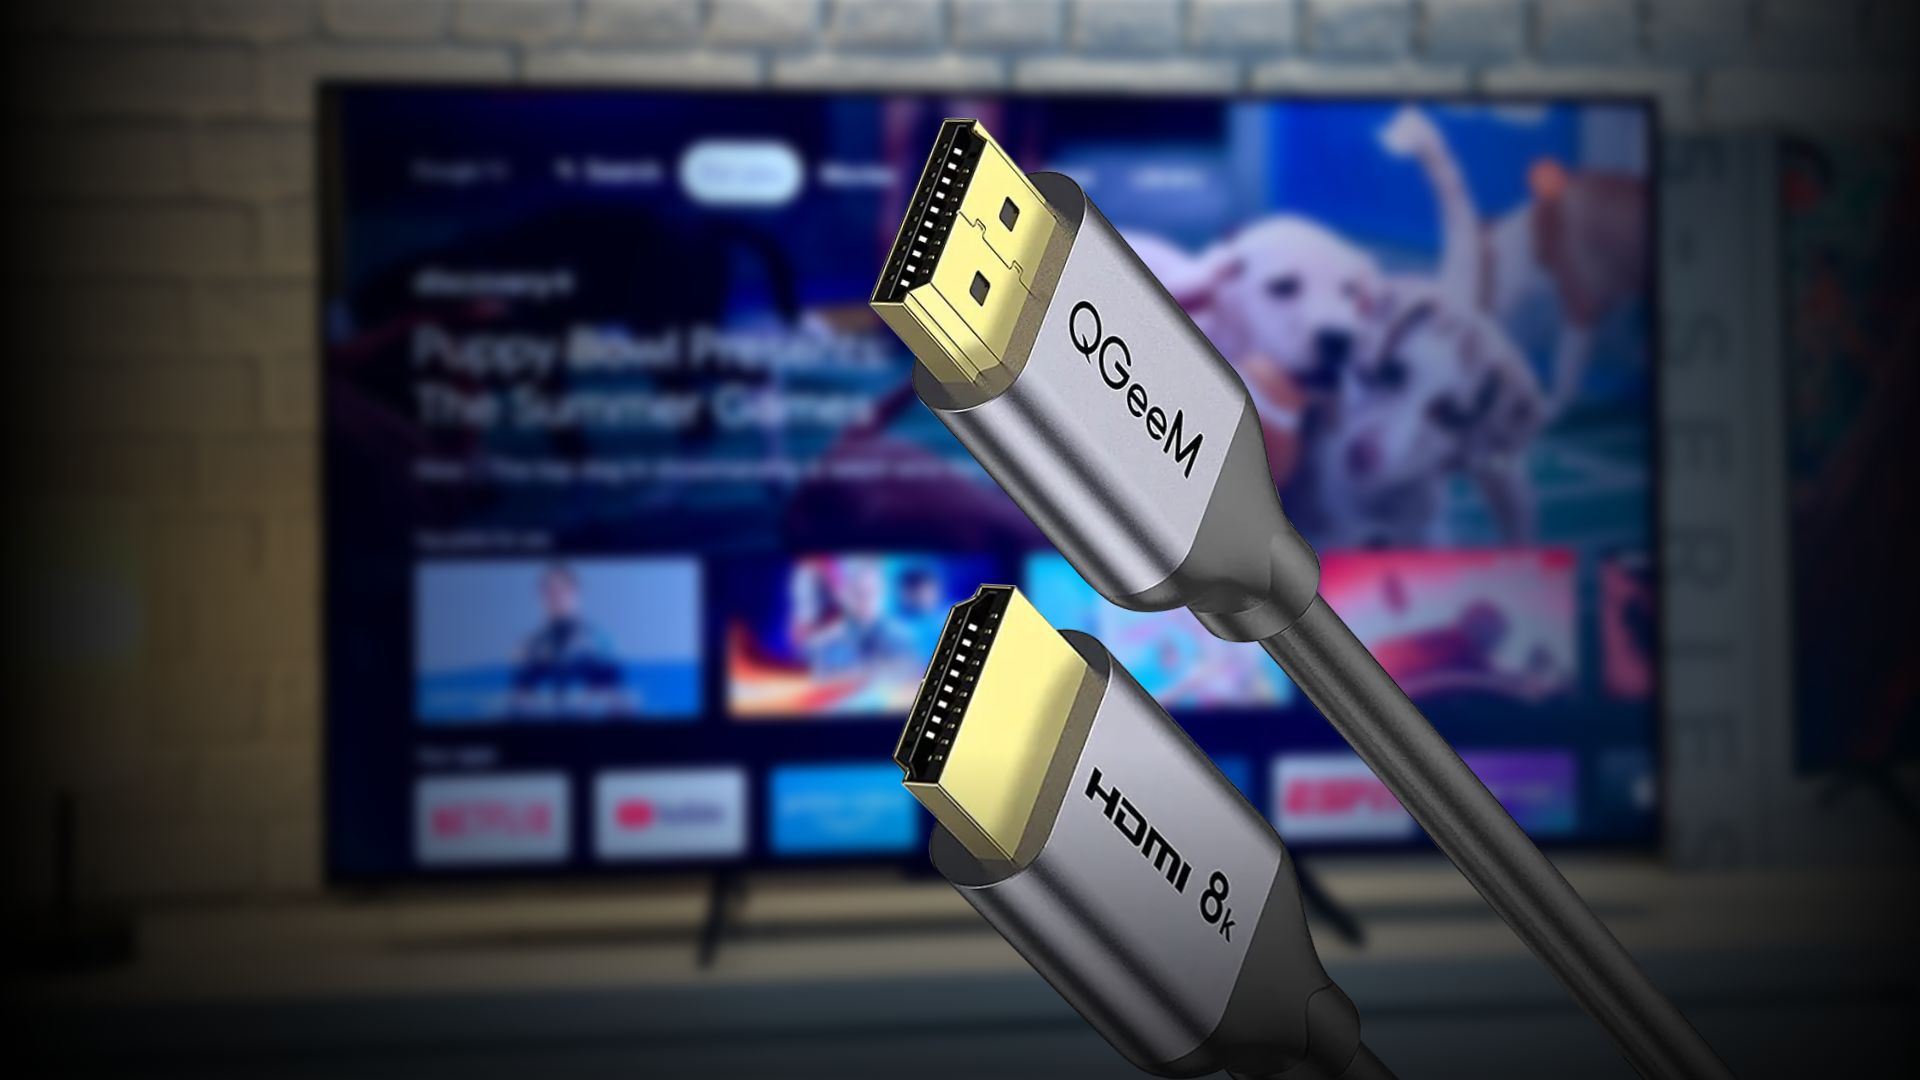 QGeem Ultra High-Speed HDMI Cable